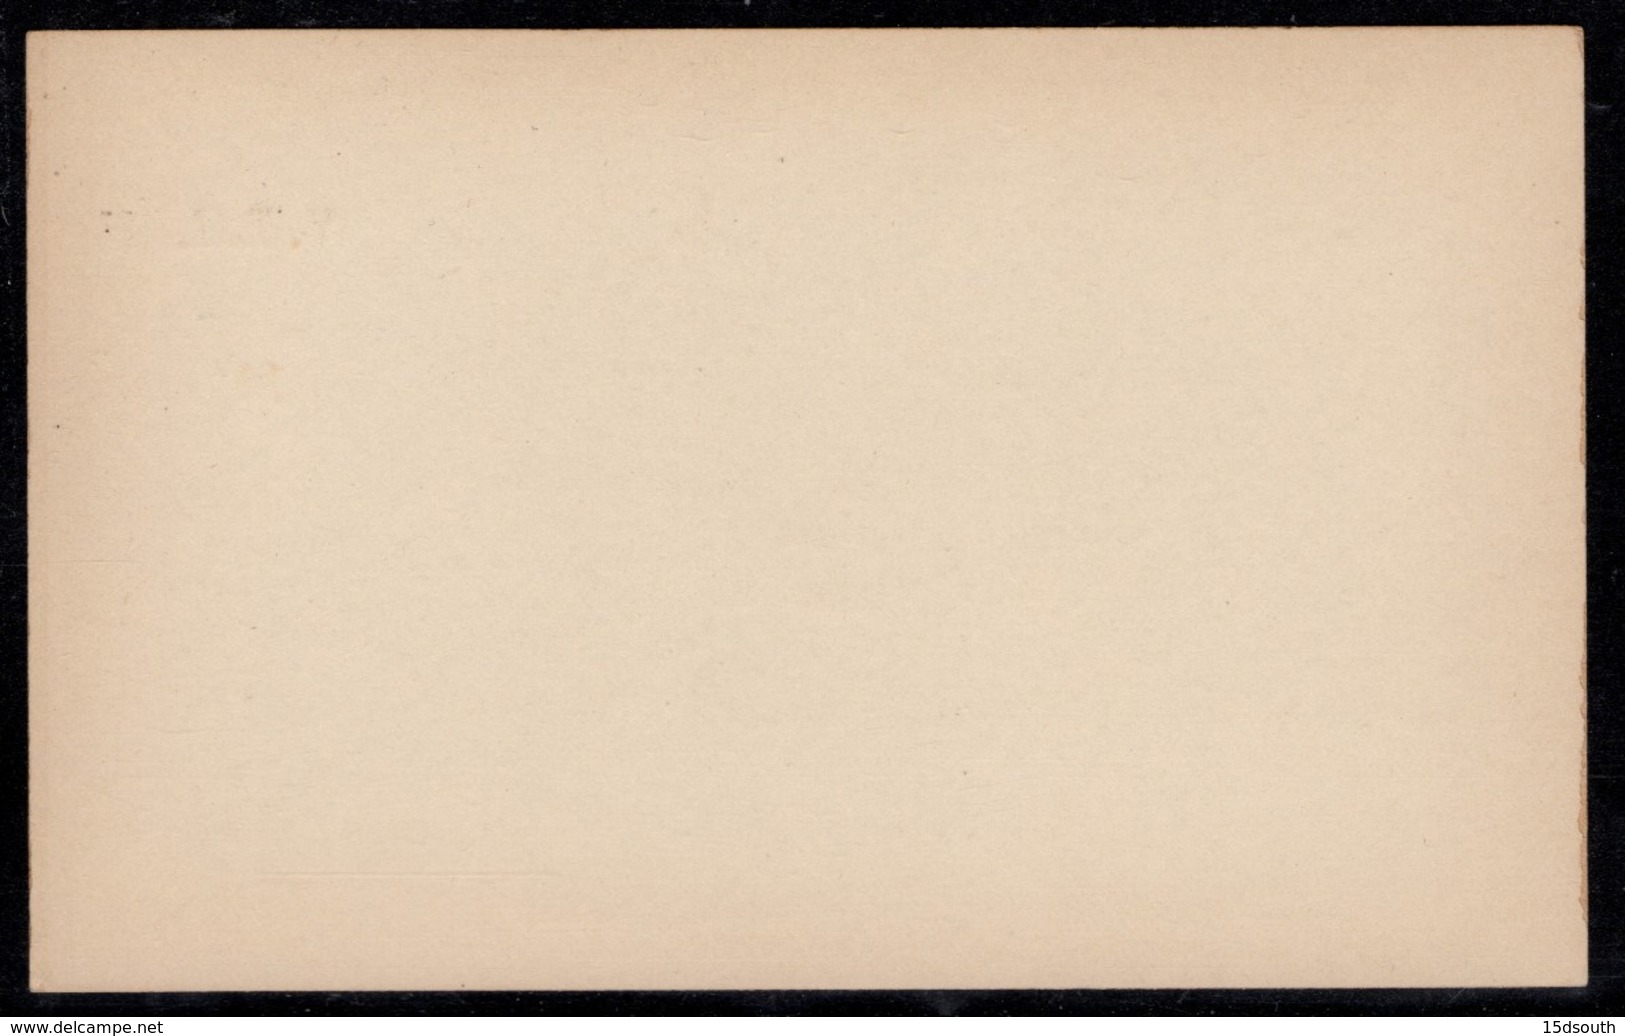 Orange Free State - 1900 VRI 1d Postcard Brief Kaart Mint - Orange Free State (1868-1909)